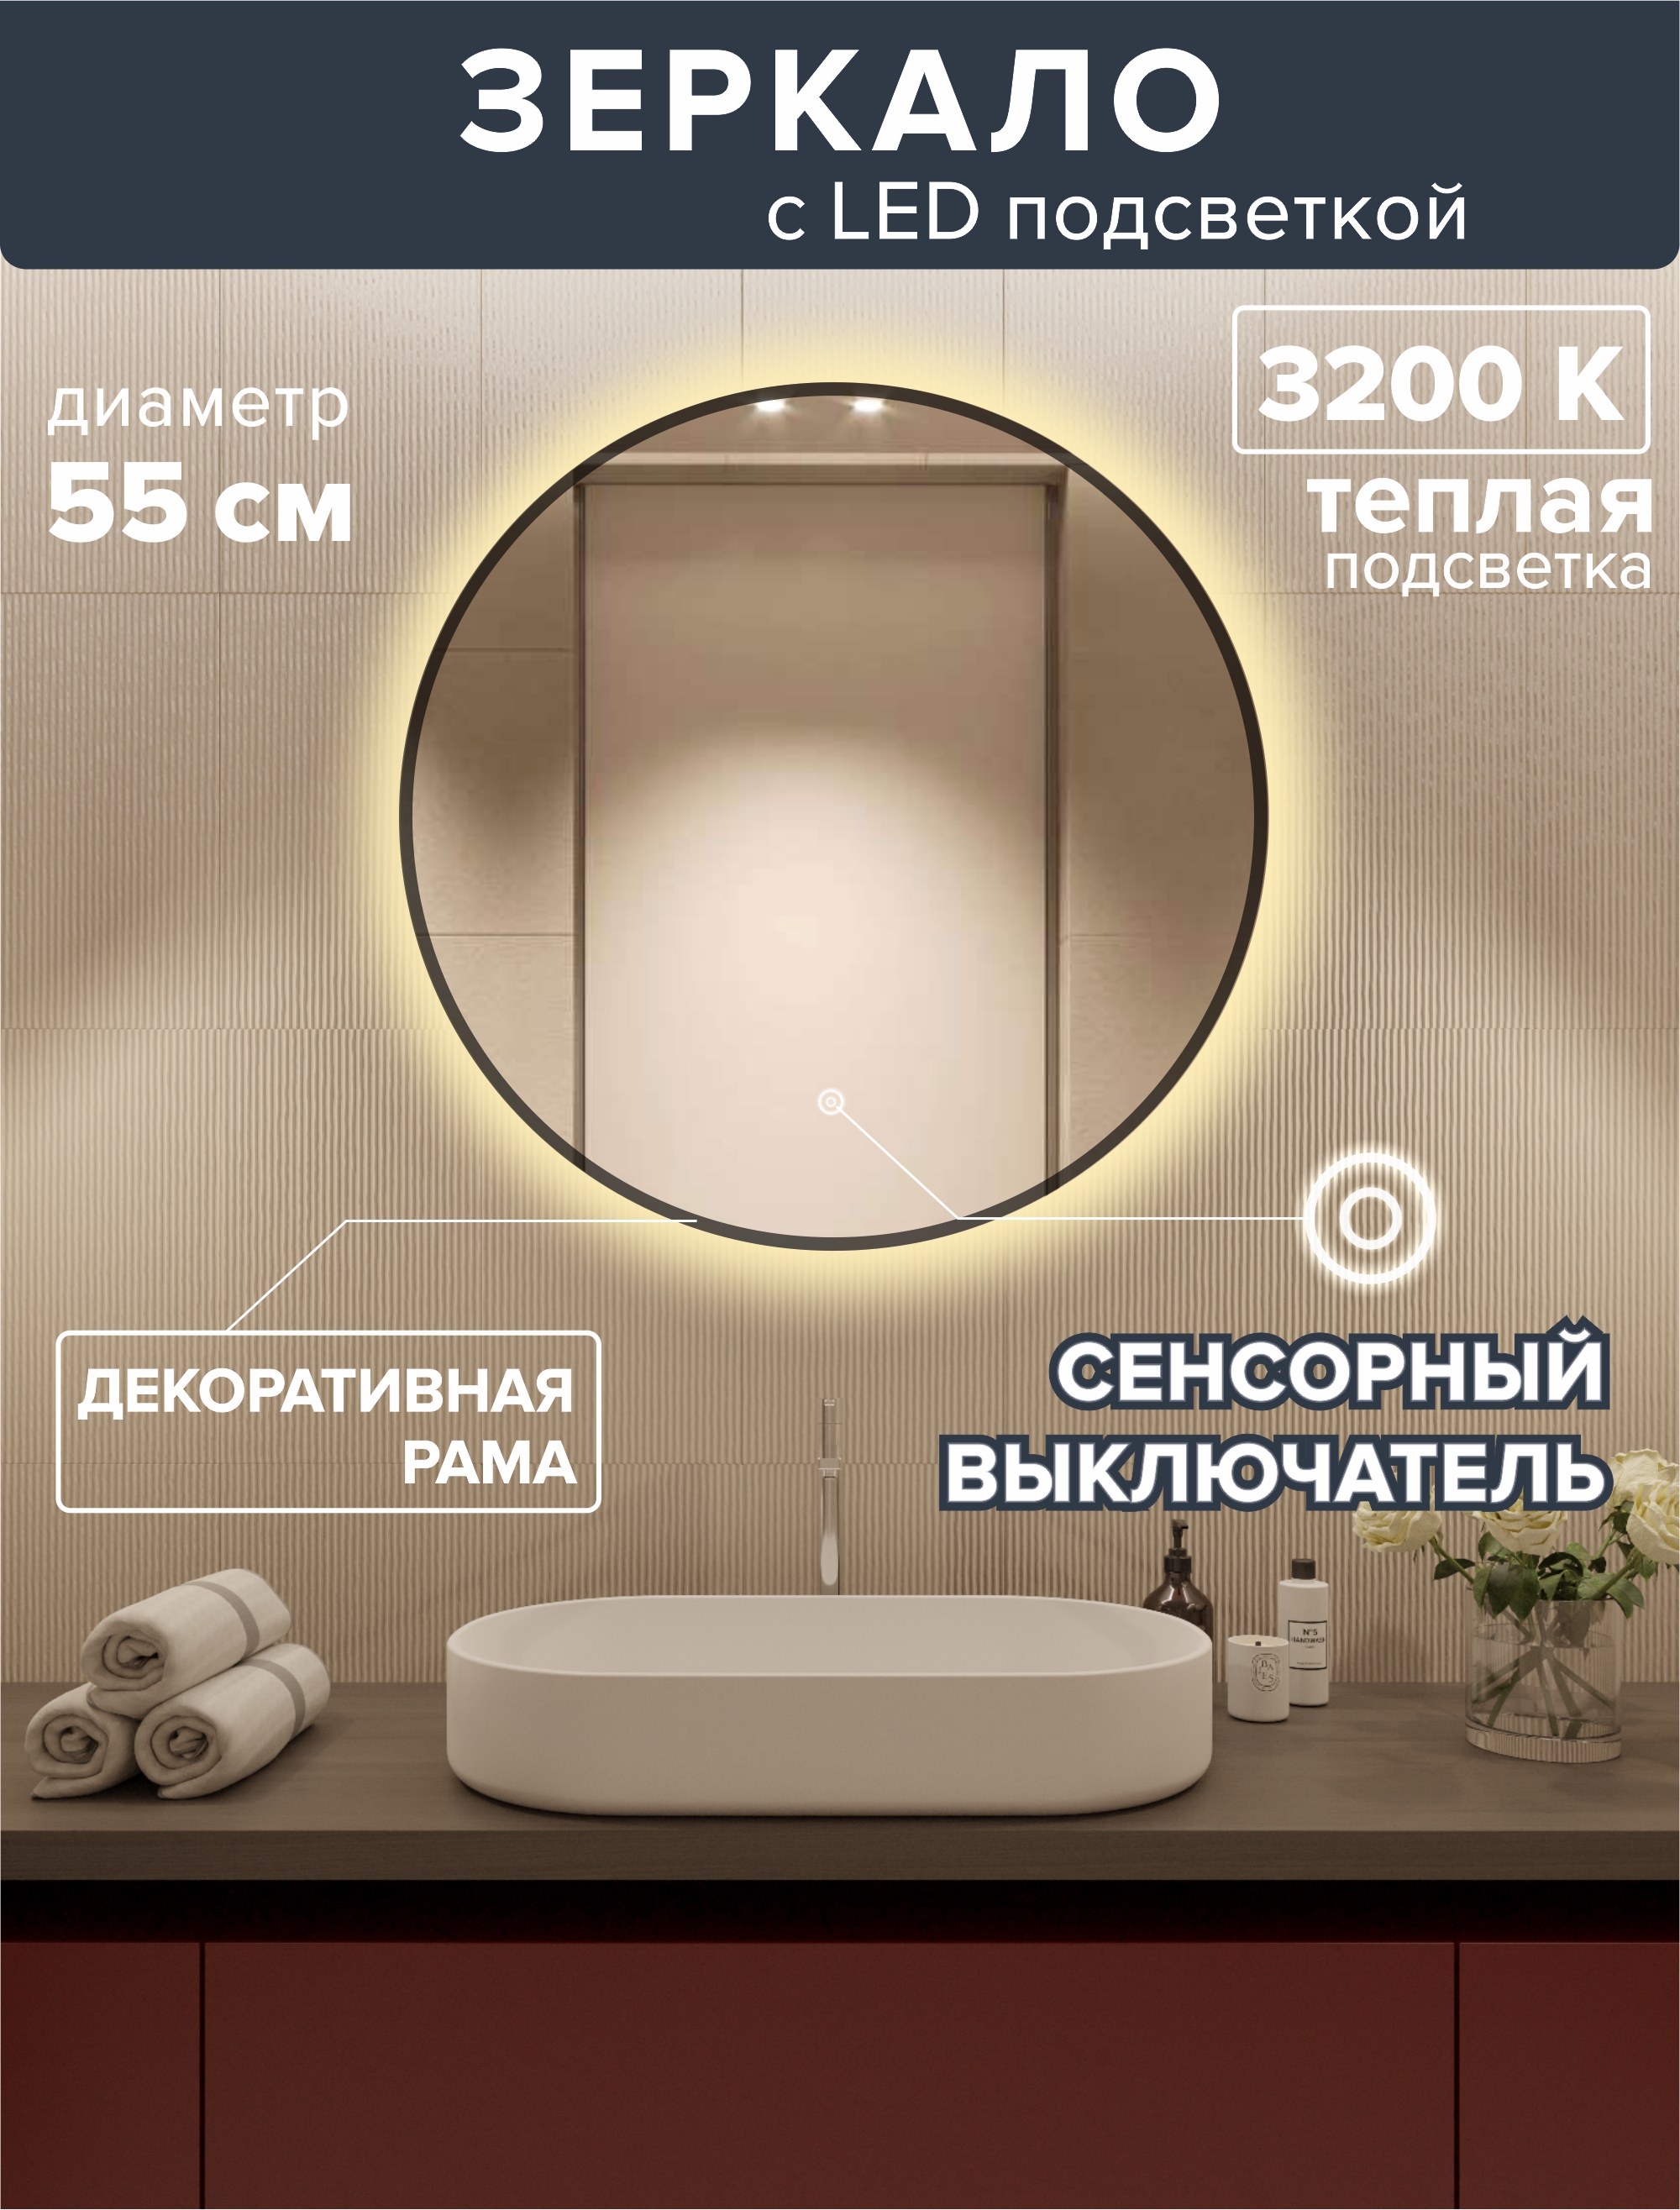 Зеркало для ванной Alfa Mirrors с теплой подсветкой 3200К с рамой круглое 55см,MNa-55t-ram блюдо kulsan white granite круглое 20 см